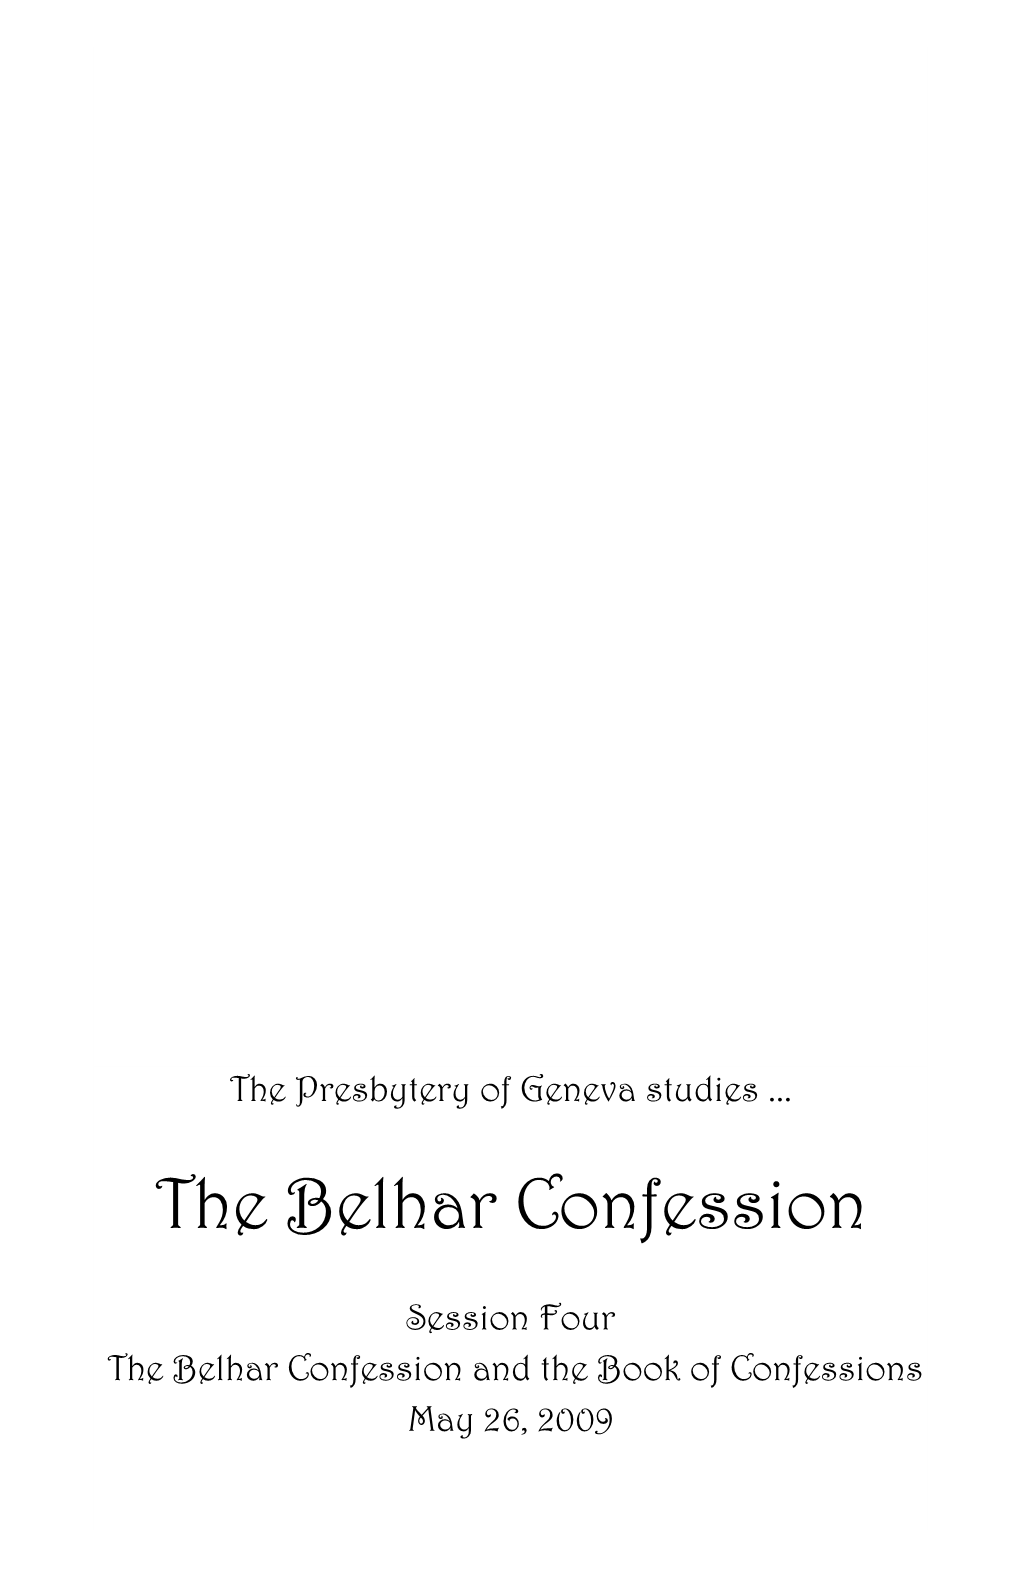 Geneva Presbytery Studies the Belhar Confession